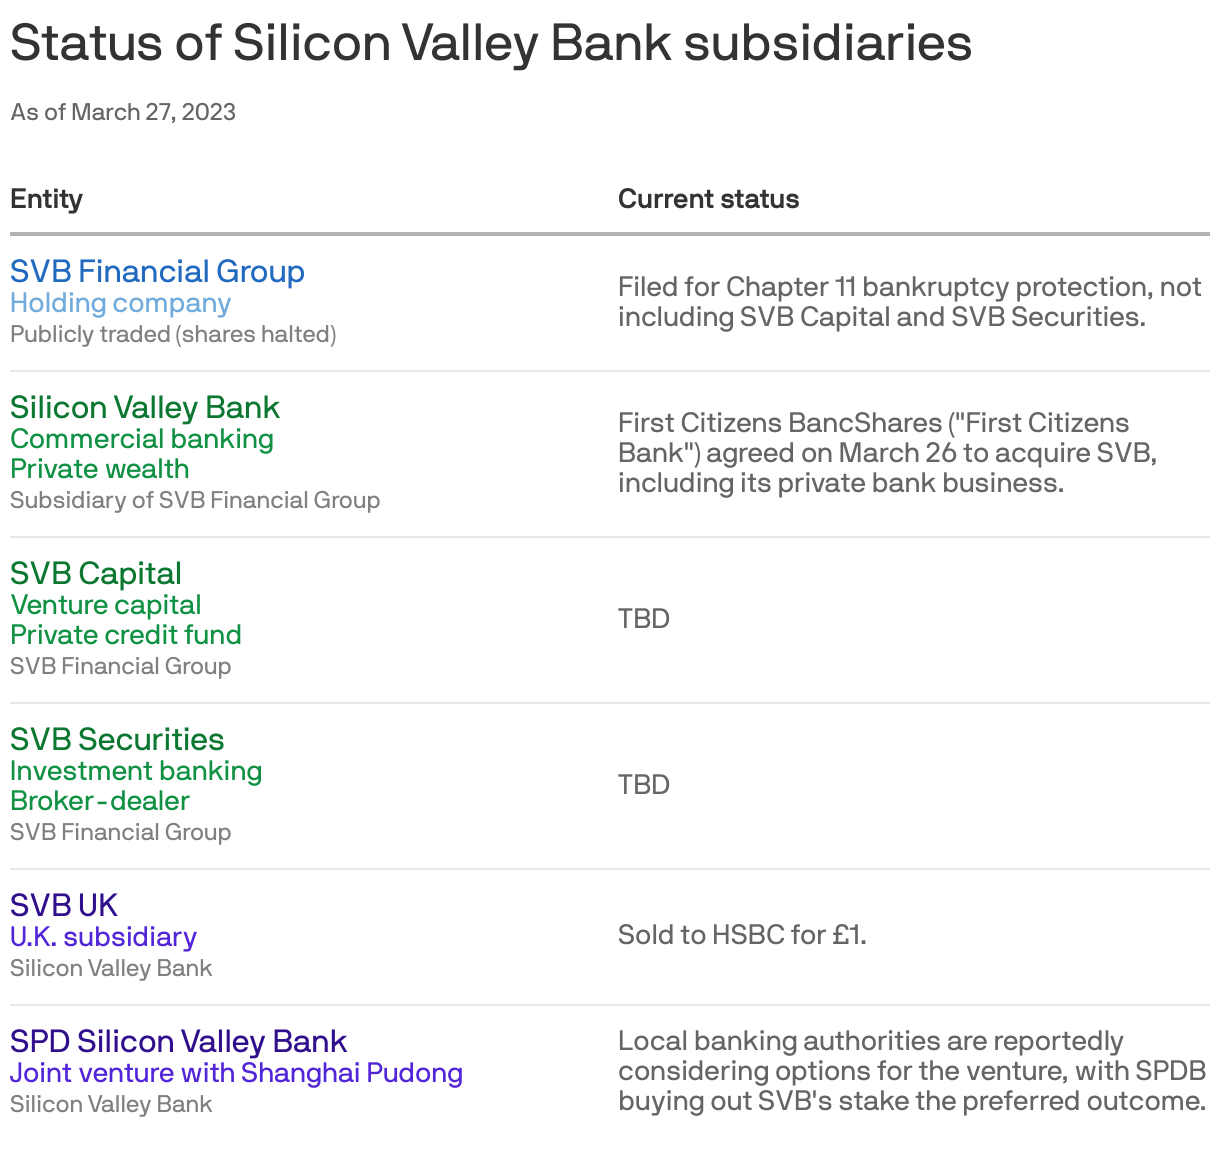 Status of Silicon Valley Bank subsidiaries